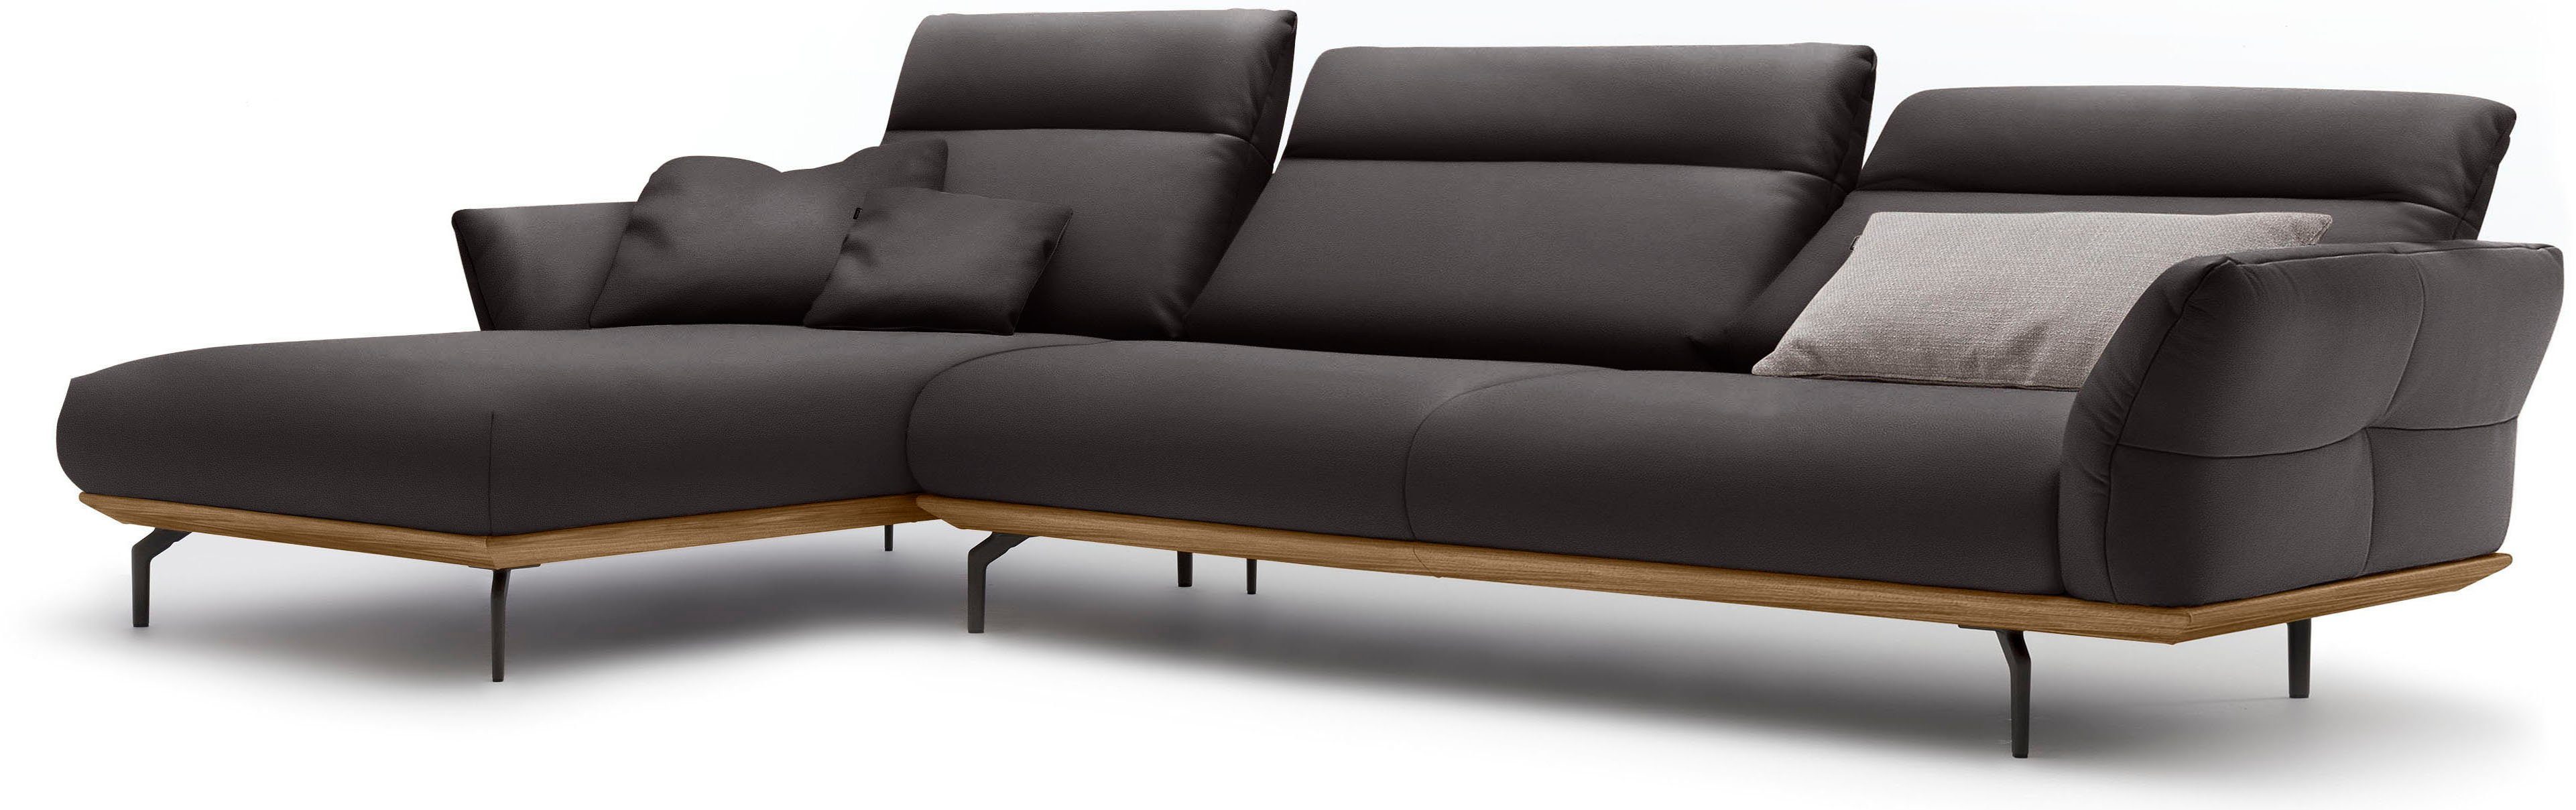 Umbragrau, Nussbaum, cm hs.460, Ecksofa in 338 Winkelfüße Sockel Breite hülsta sofa in